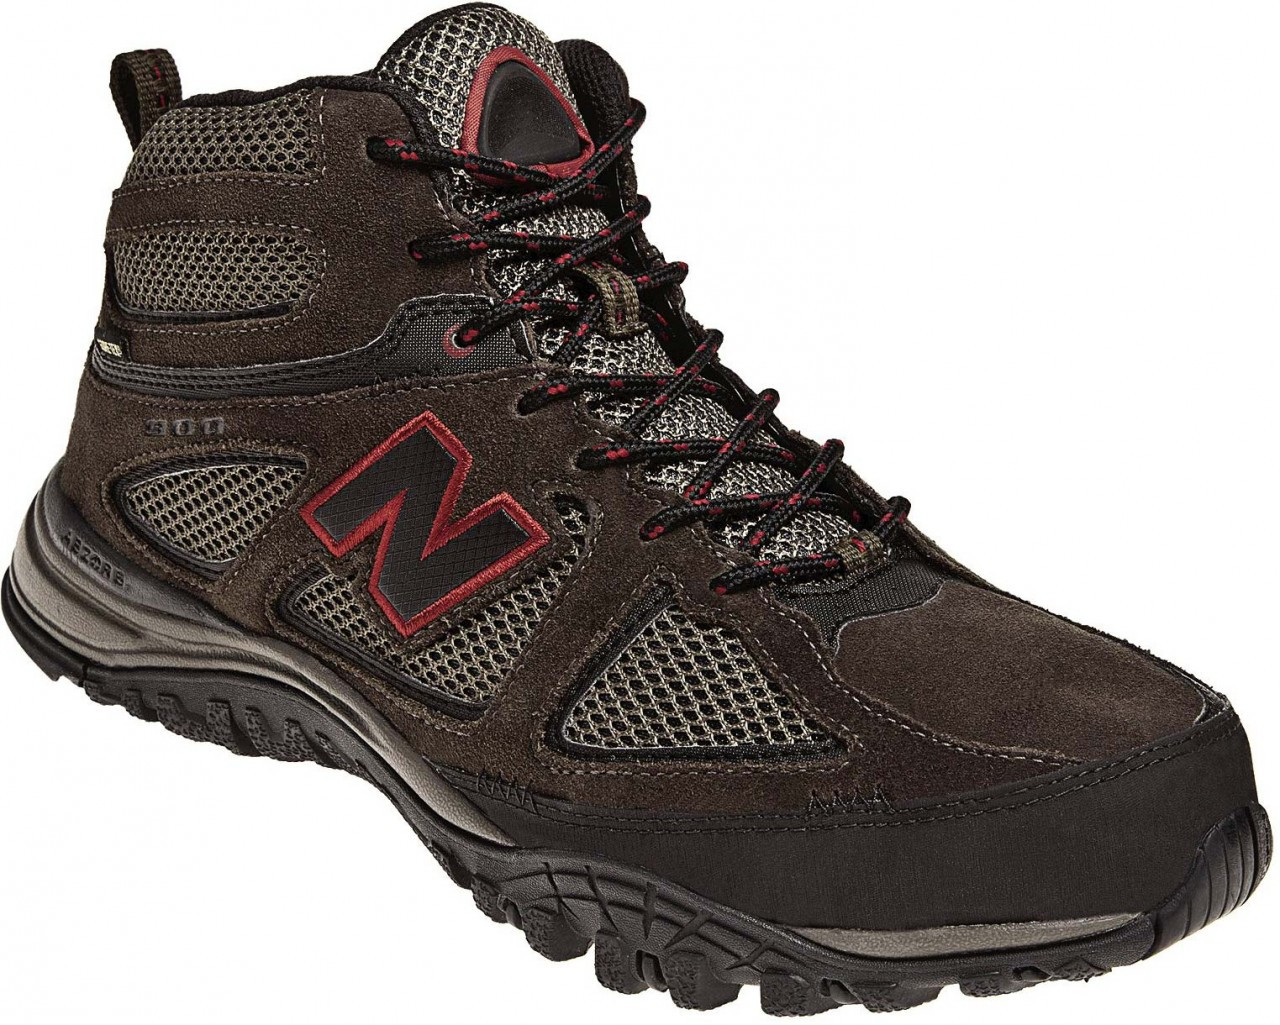 New Balance Men's 900 Mid - FREE Shipping & FREE Returns - Hiking Shoes ...